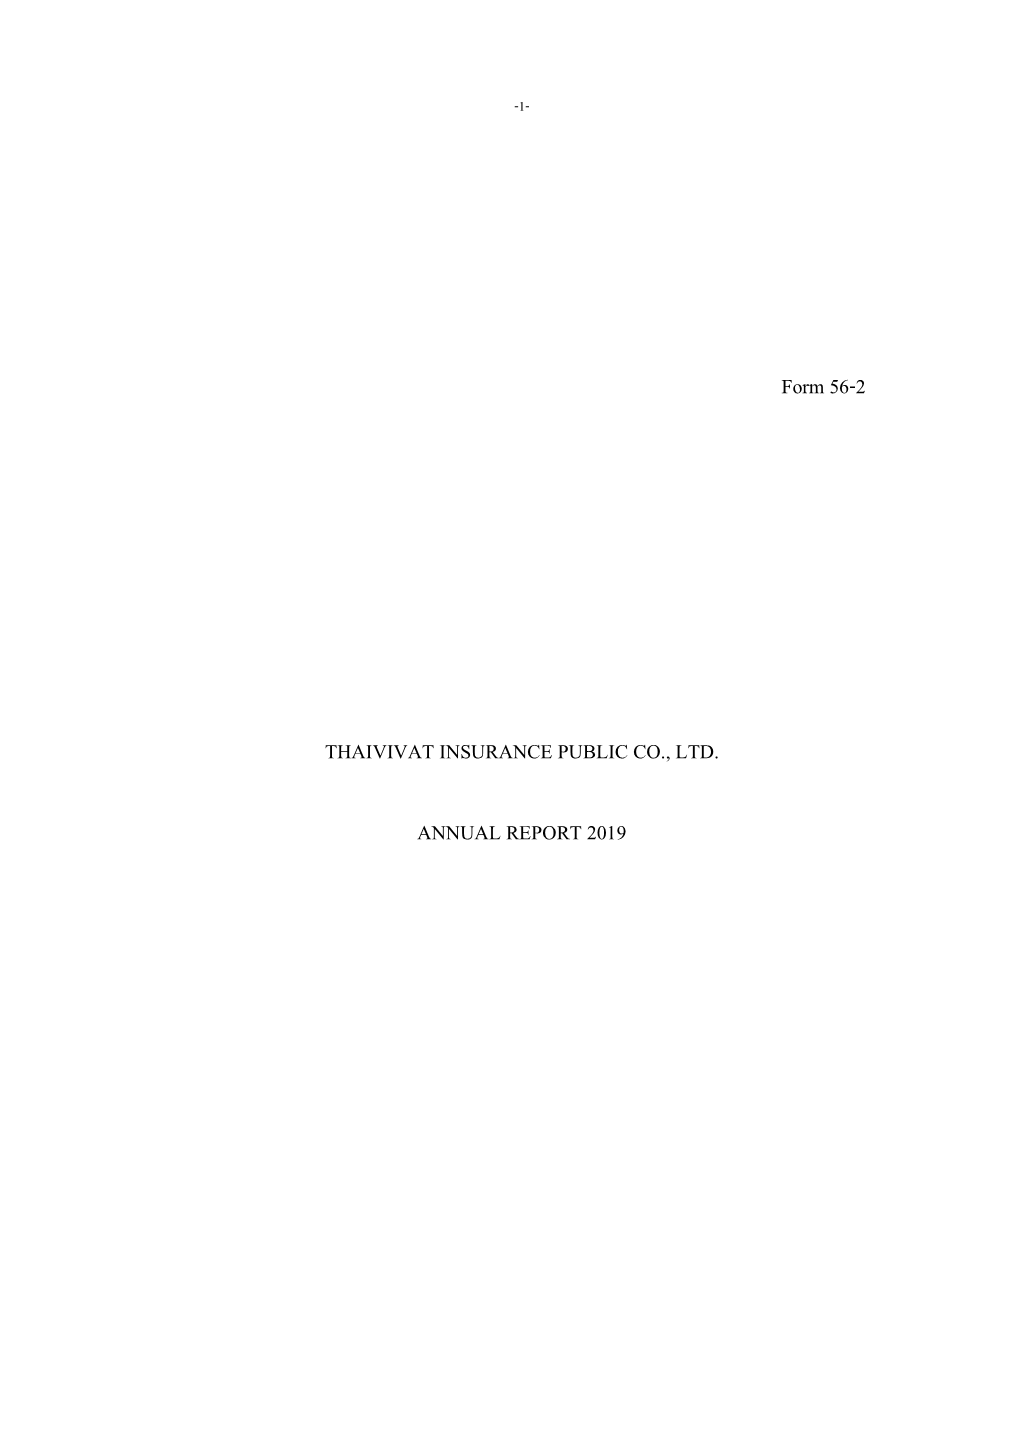 Form 56-2 THAIVIVAT INSURANCE PUBLIC CO., LTD. ANNUAL REPORT 2019